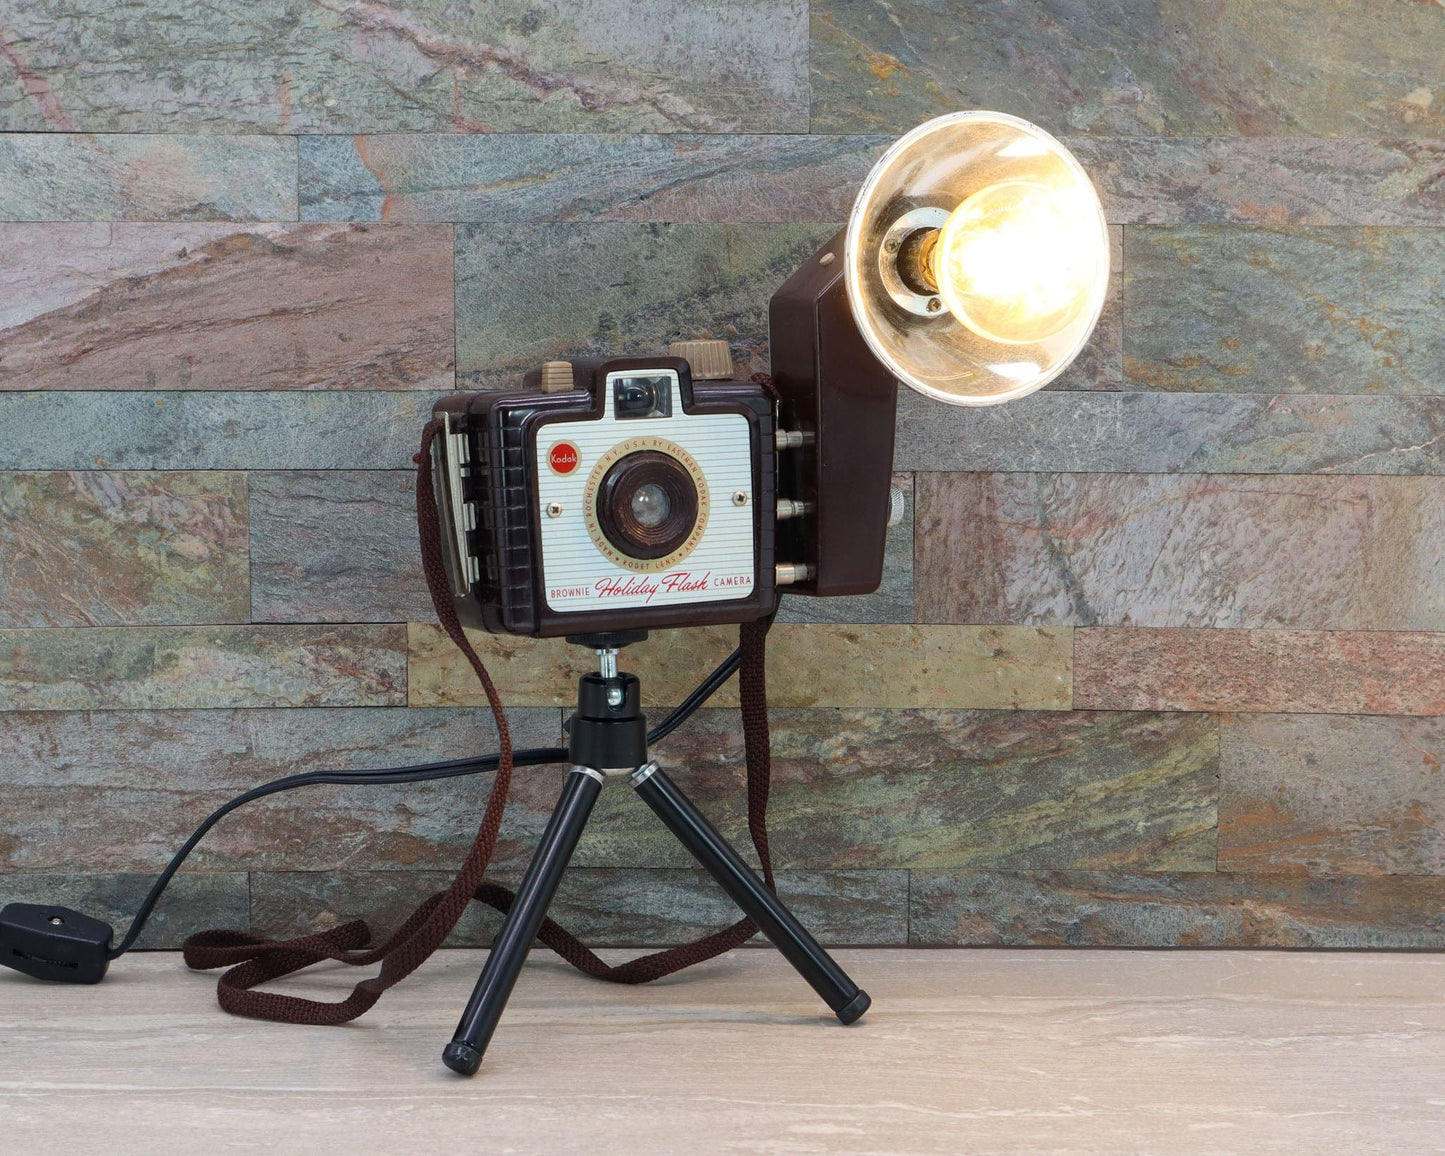 LightAndTimeArt Camera Lamp LED Reading Lamp - Task Lamp  - Kodak Brownie Holiday Flash Camera